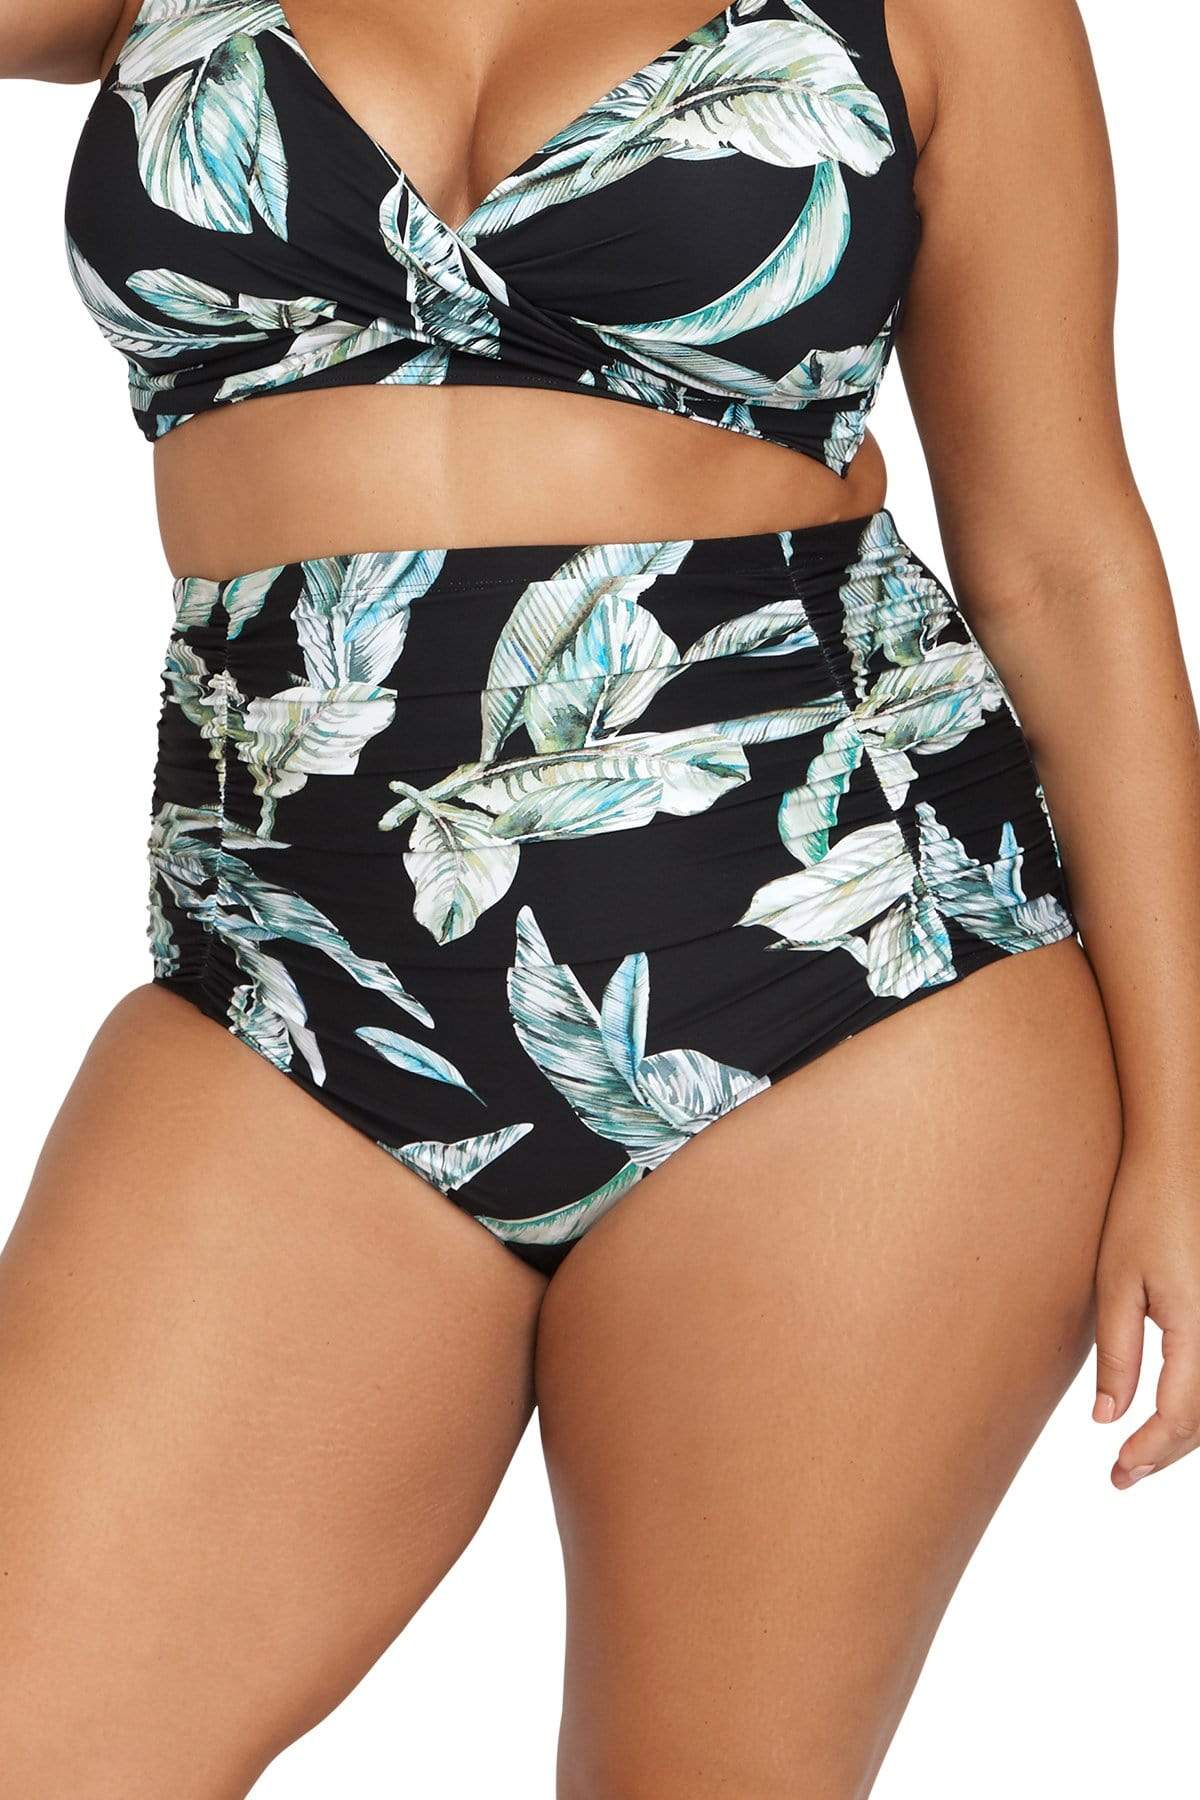 Artesands Aria Manet Fullpiece – Melmira Bra & Swimsuits